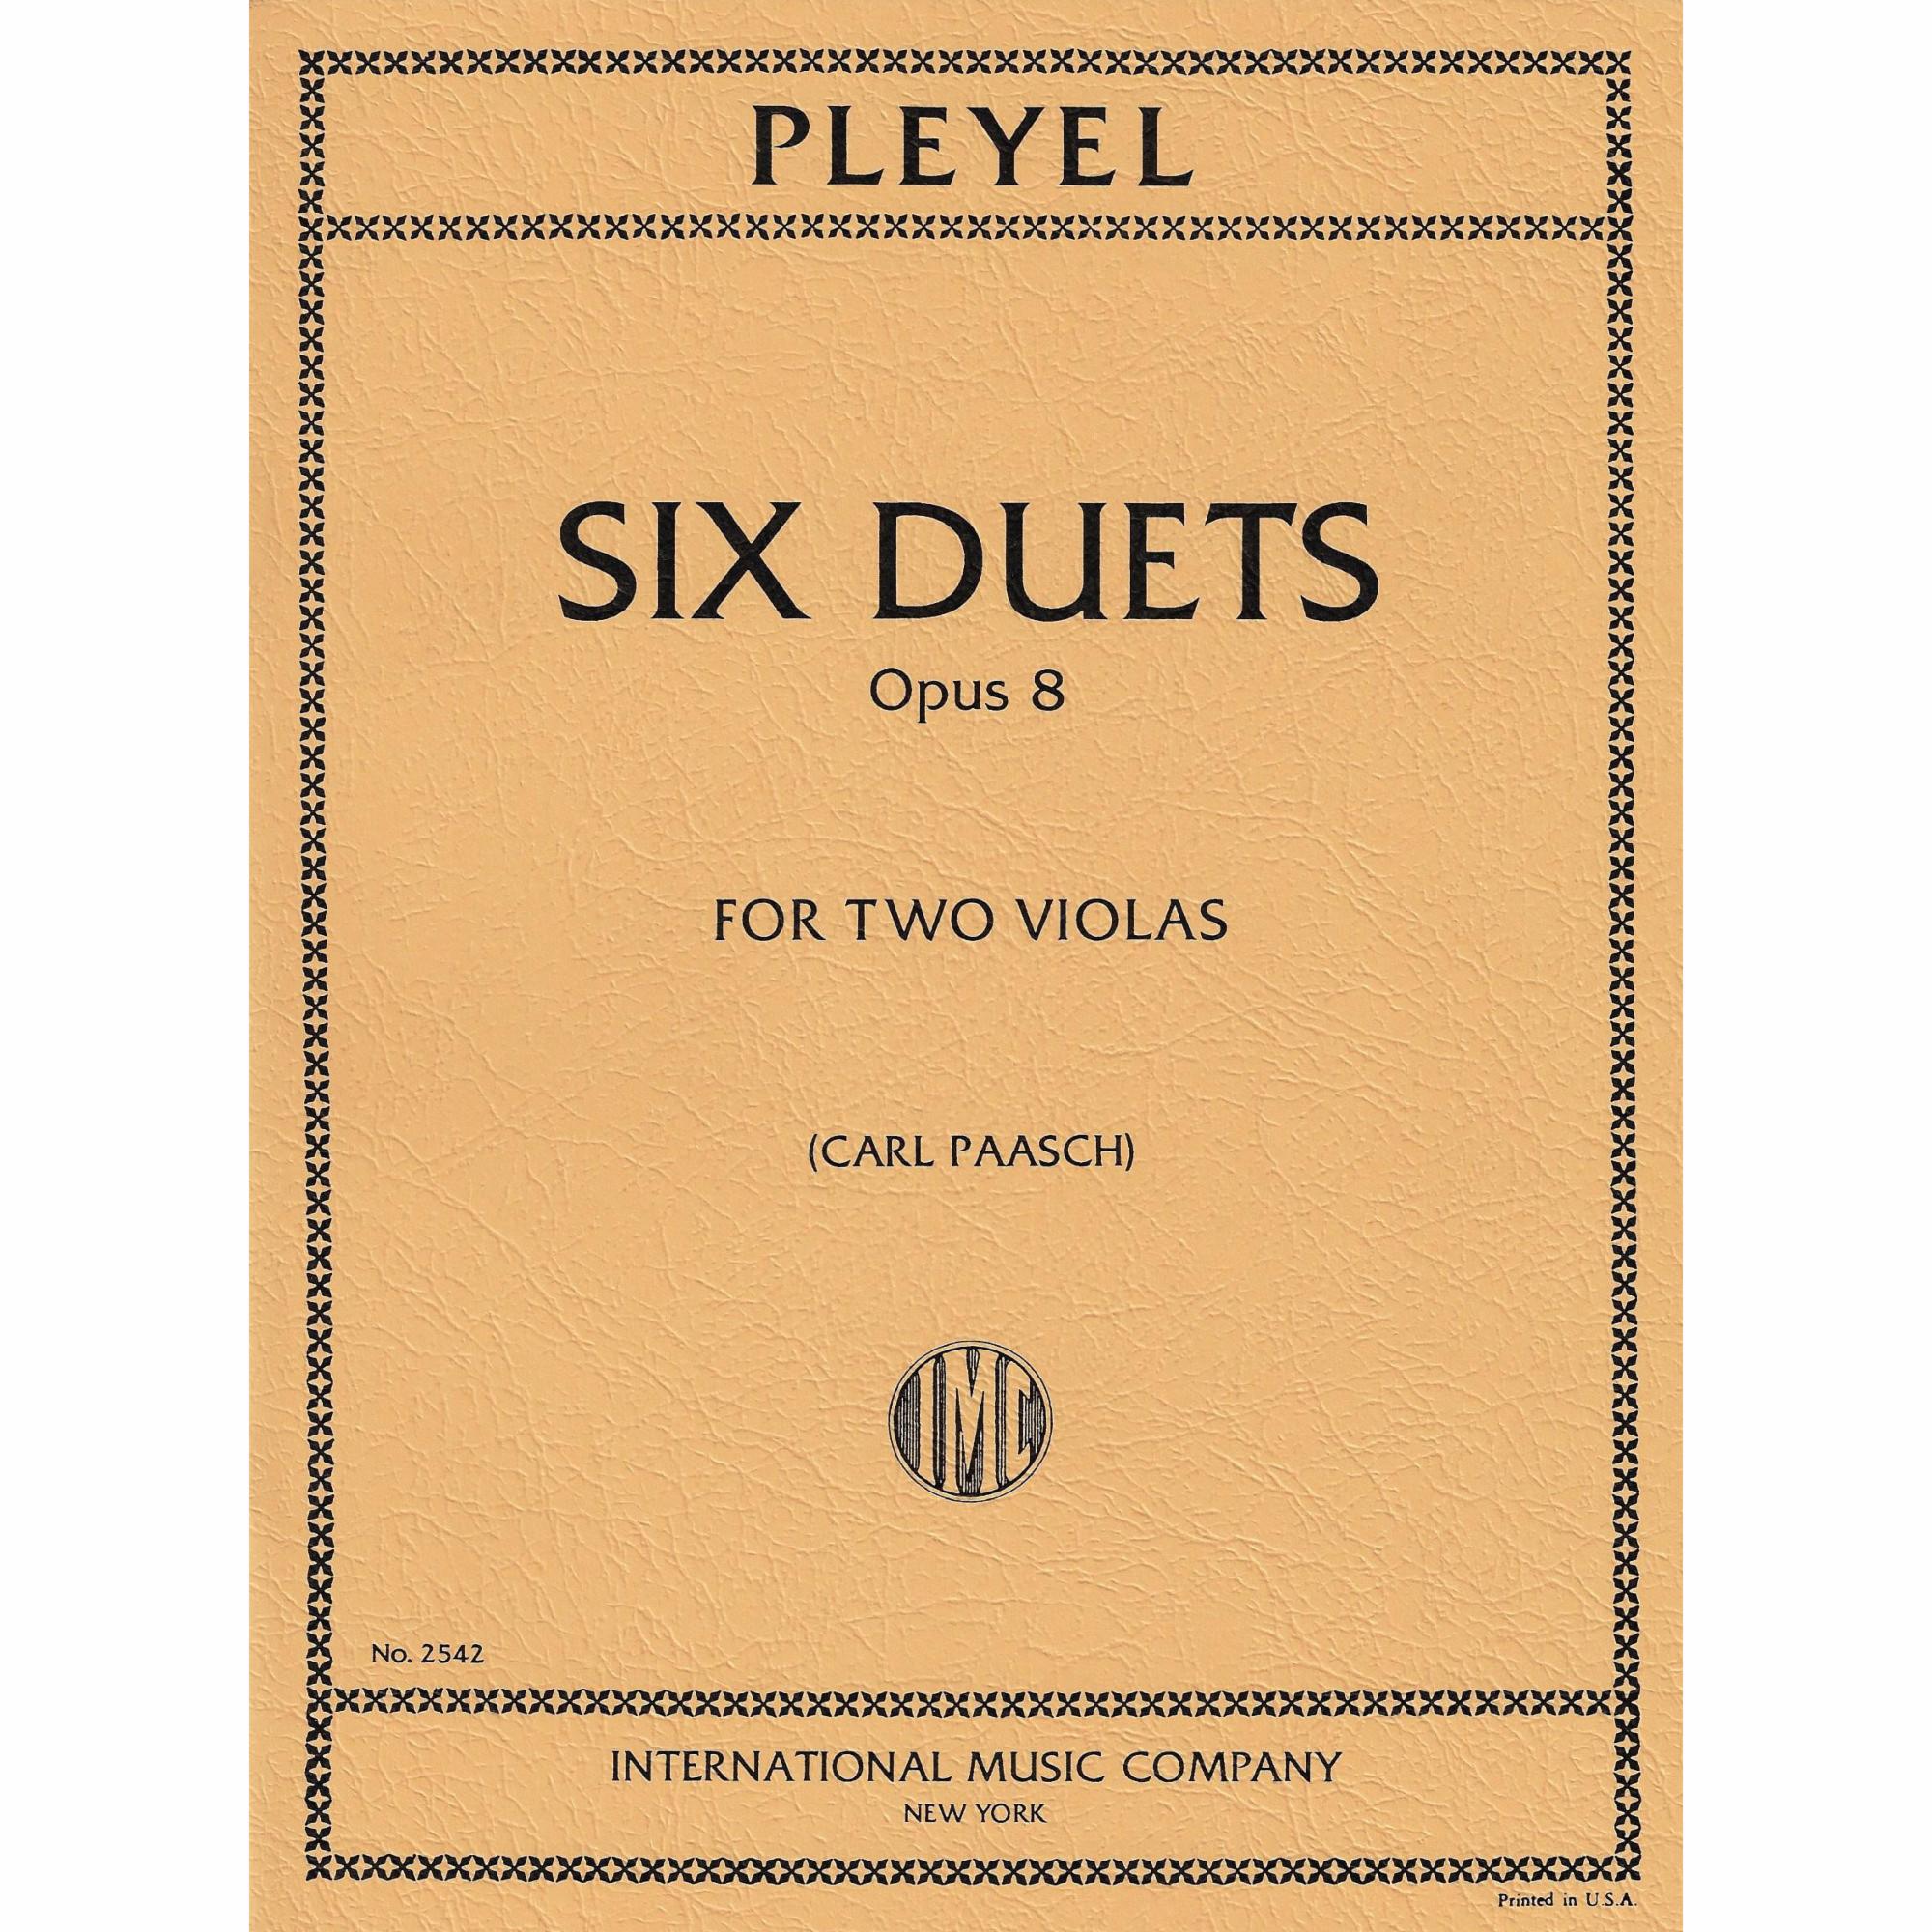 Pleyel -- Six Duets, Op. 8 for Two Violas